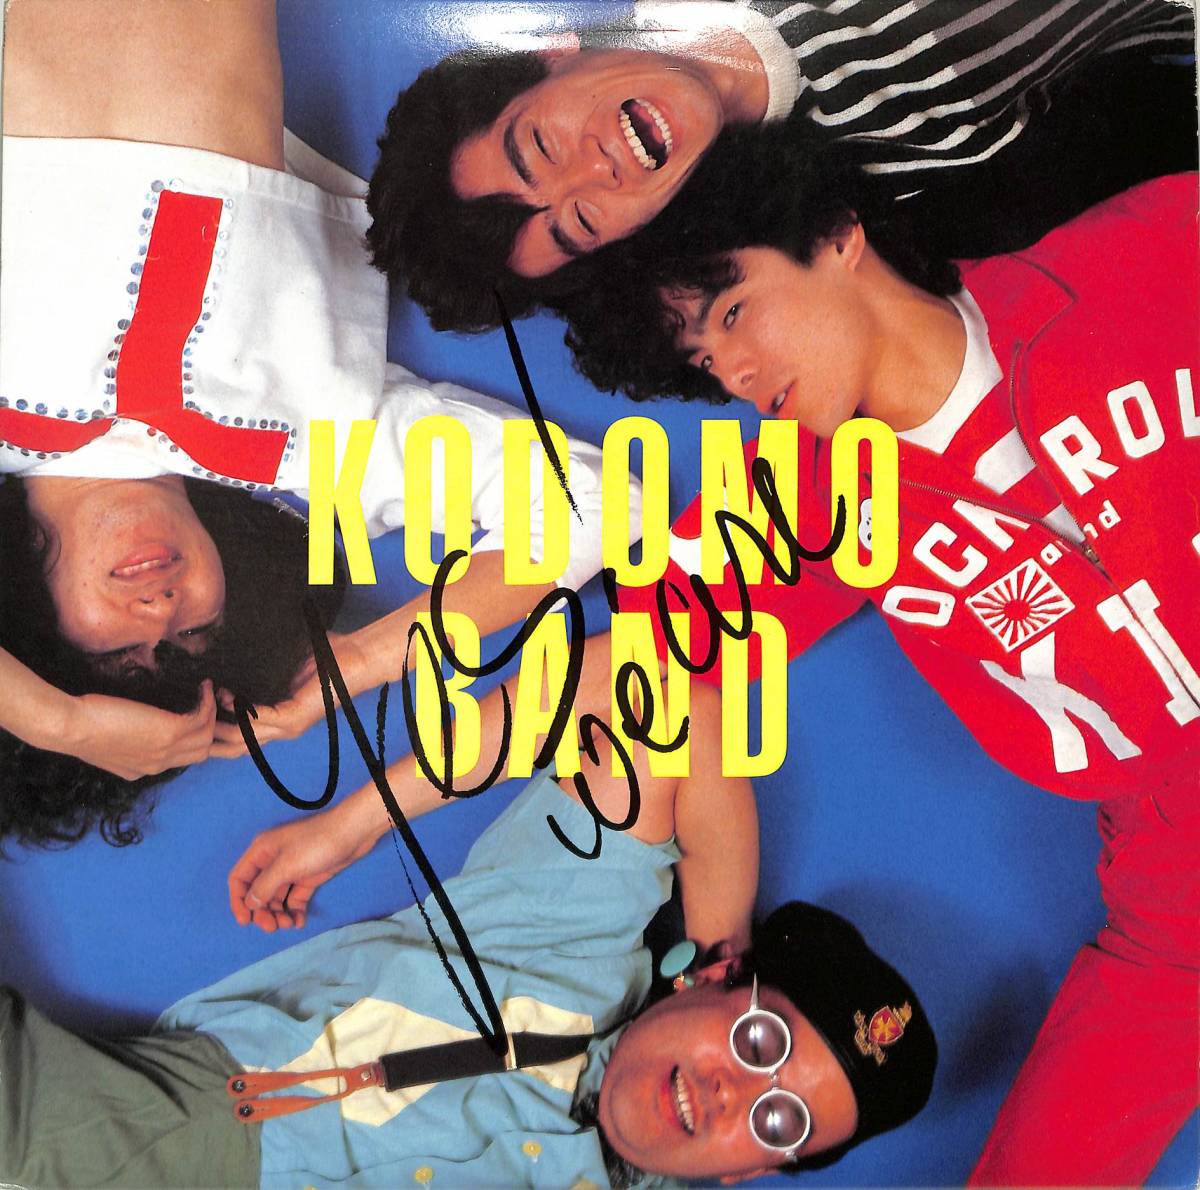 A00558206/LP/子供ばんど(KODOMO BAND・うじきつよし)「Yes! We Are Kodomo Band (1983年・19-3H-98・ハードロック)」_画像1